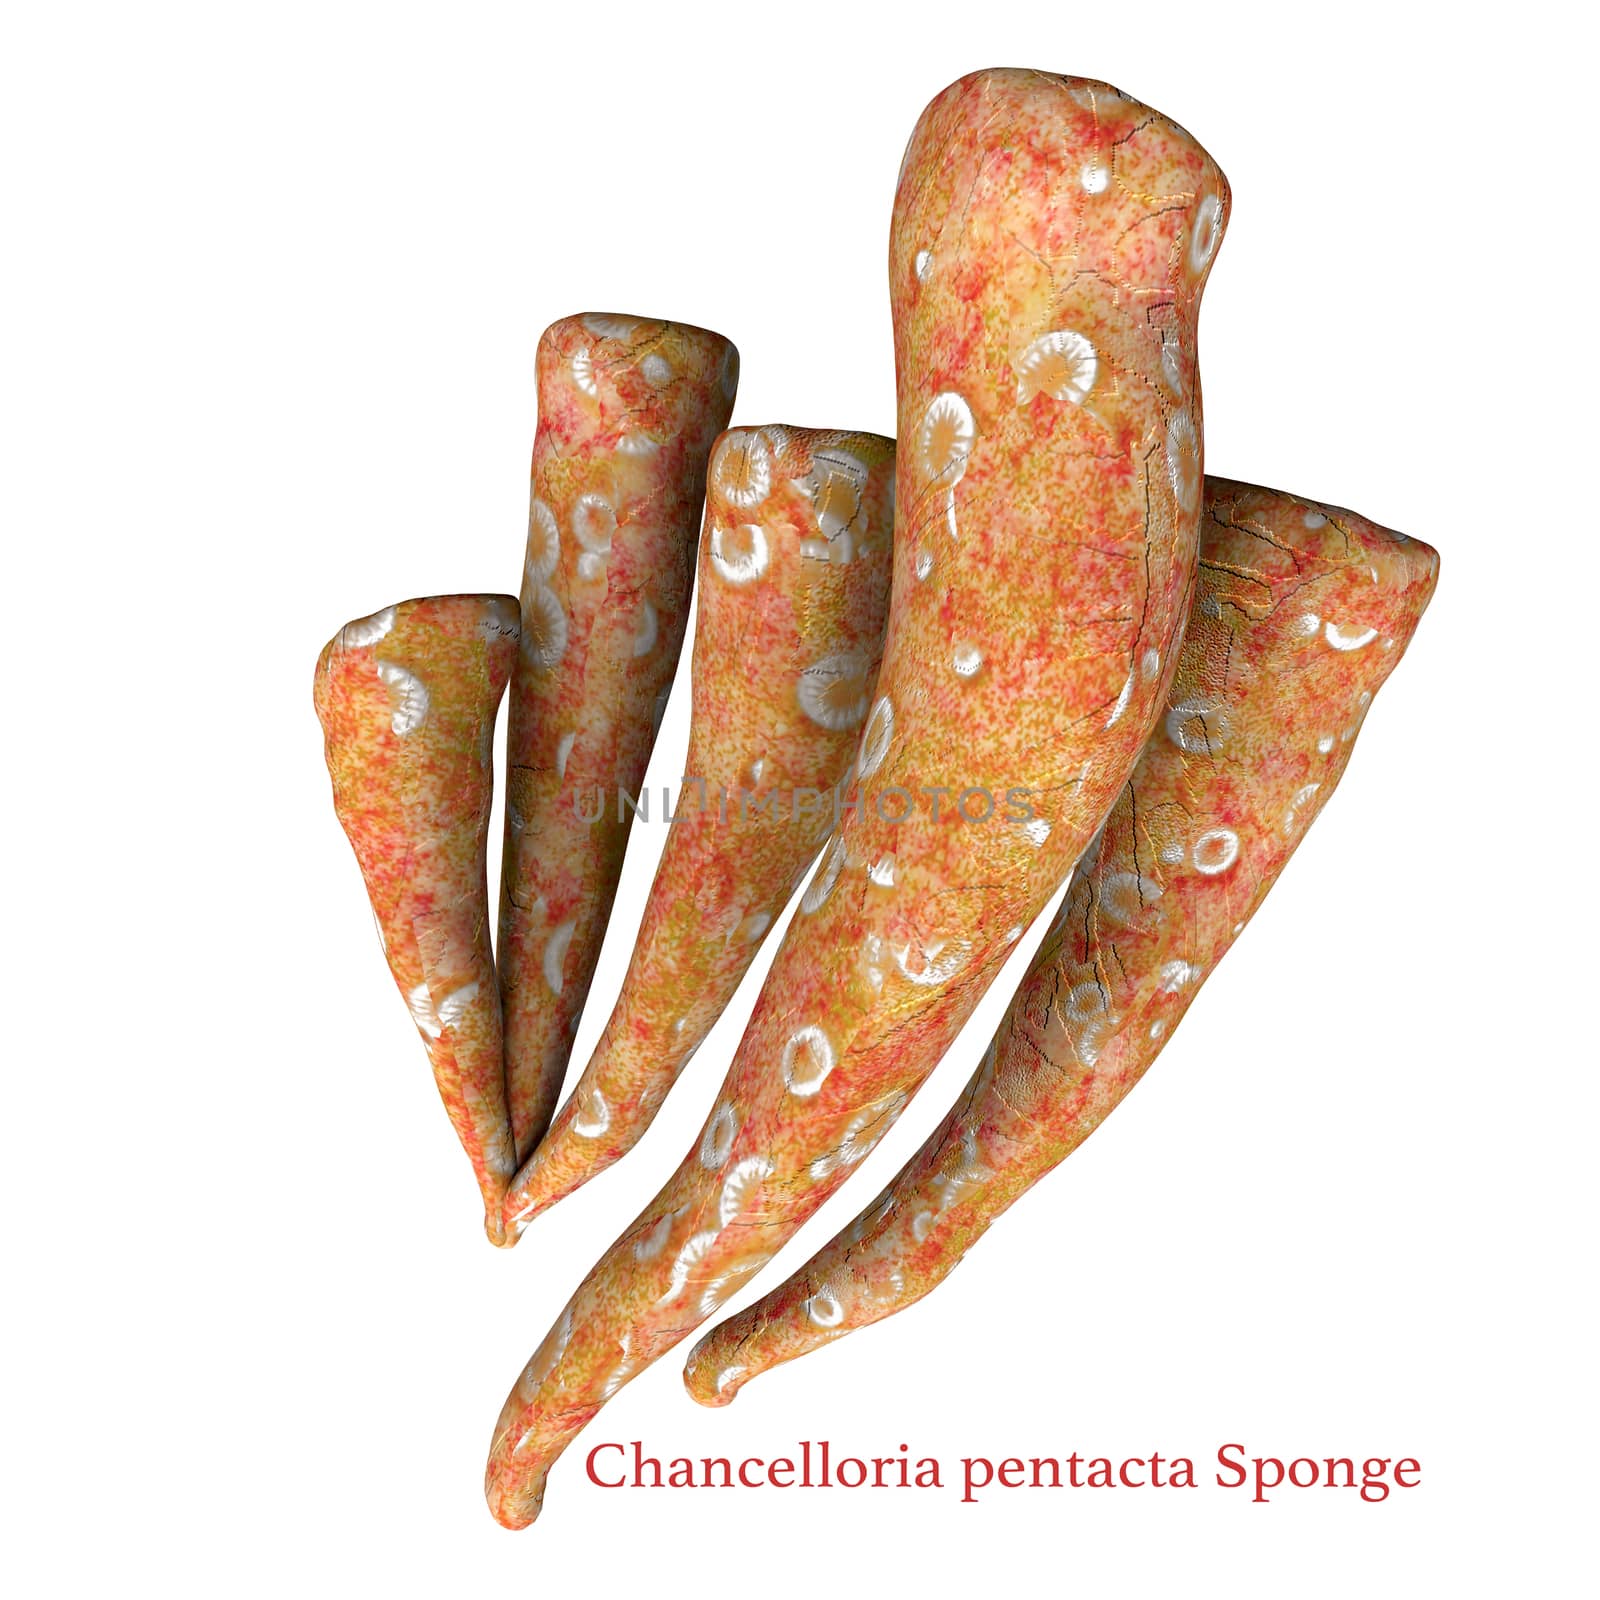 Chancelloria pentacta Sponge with Font by Catmando